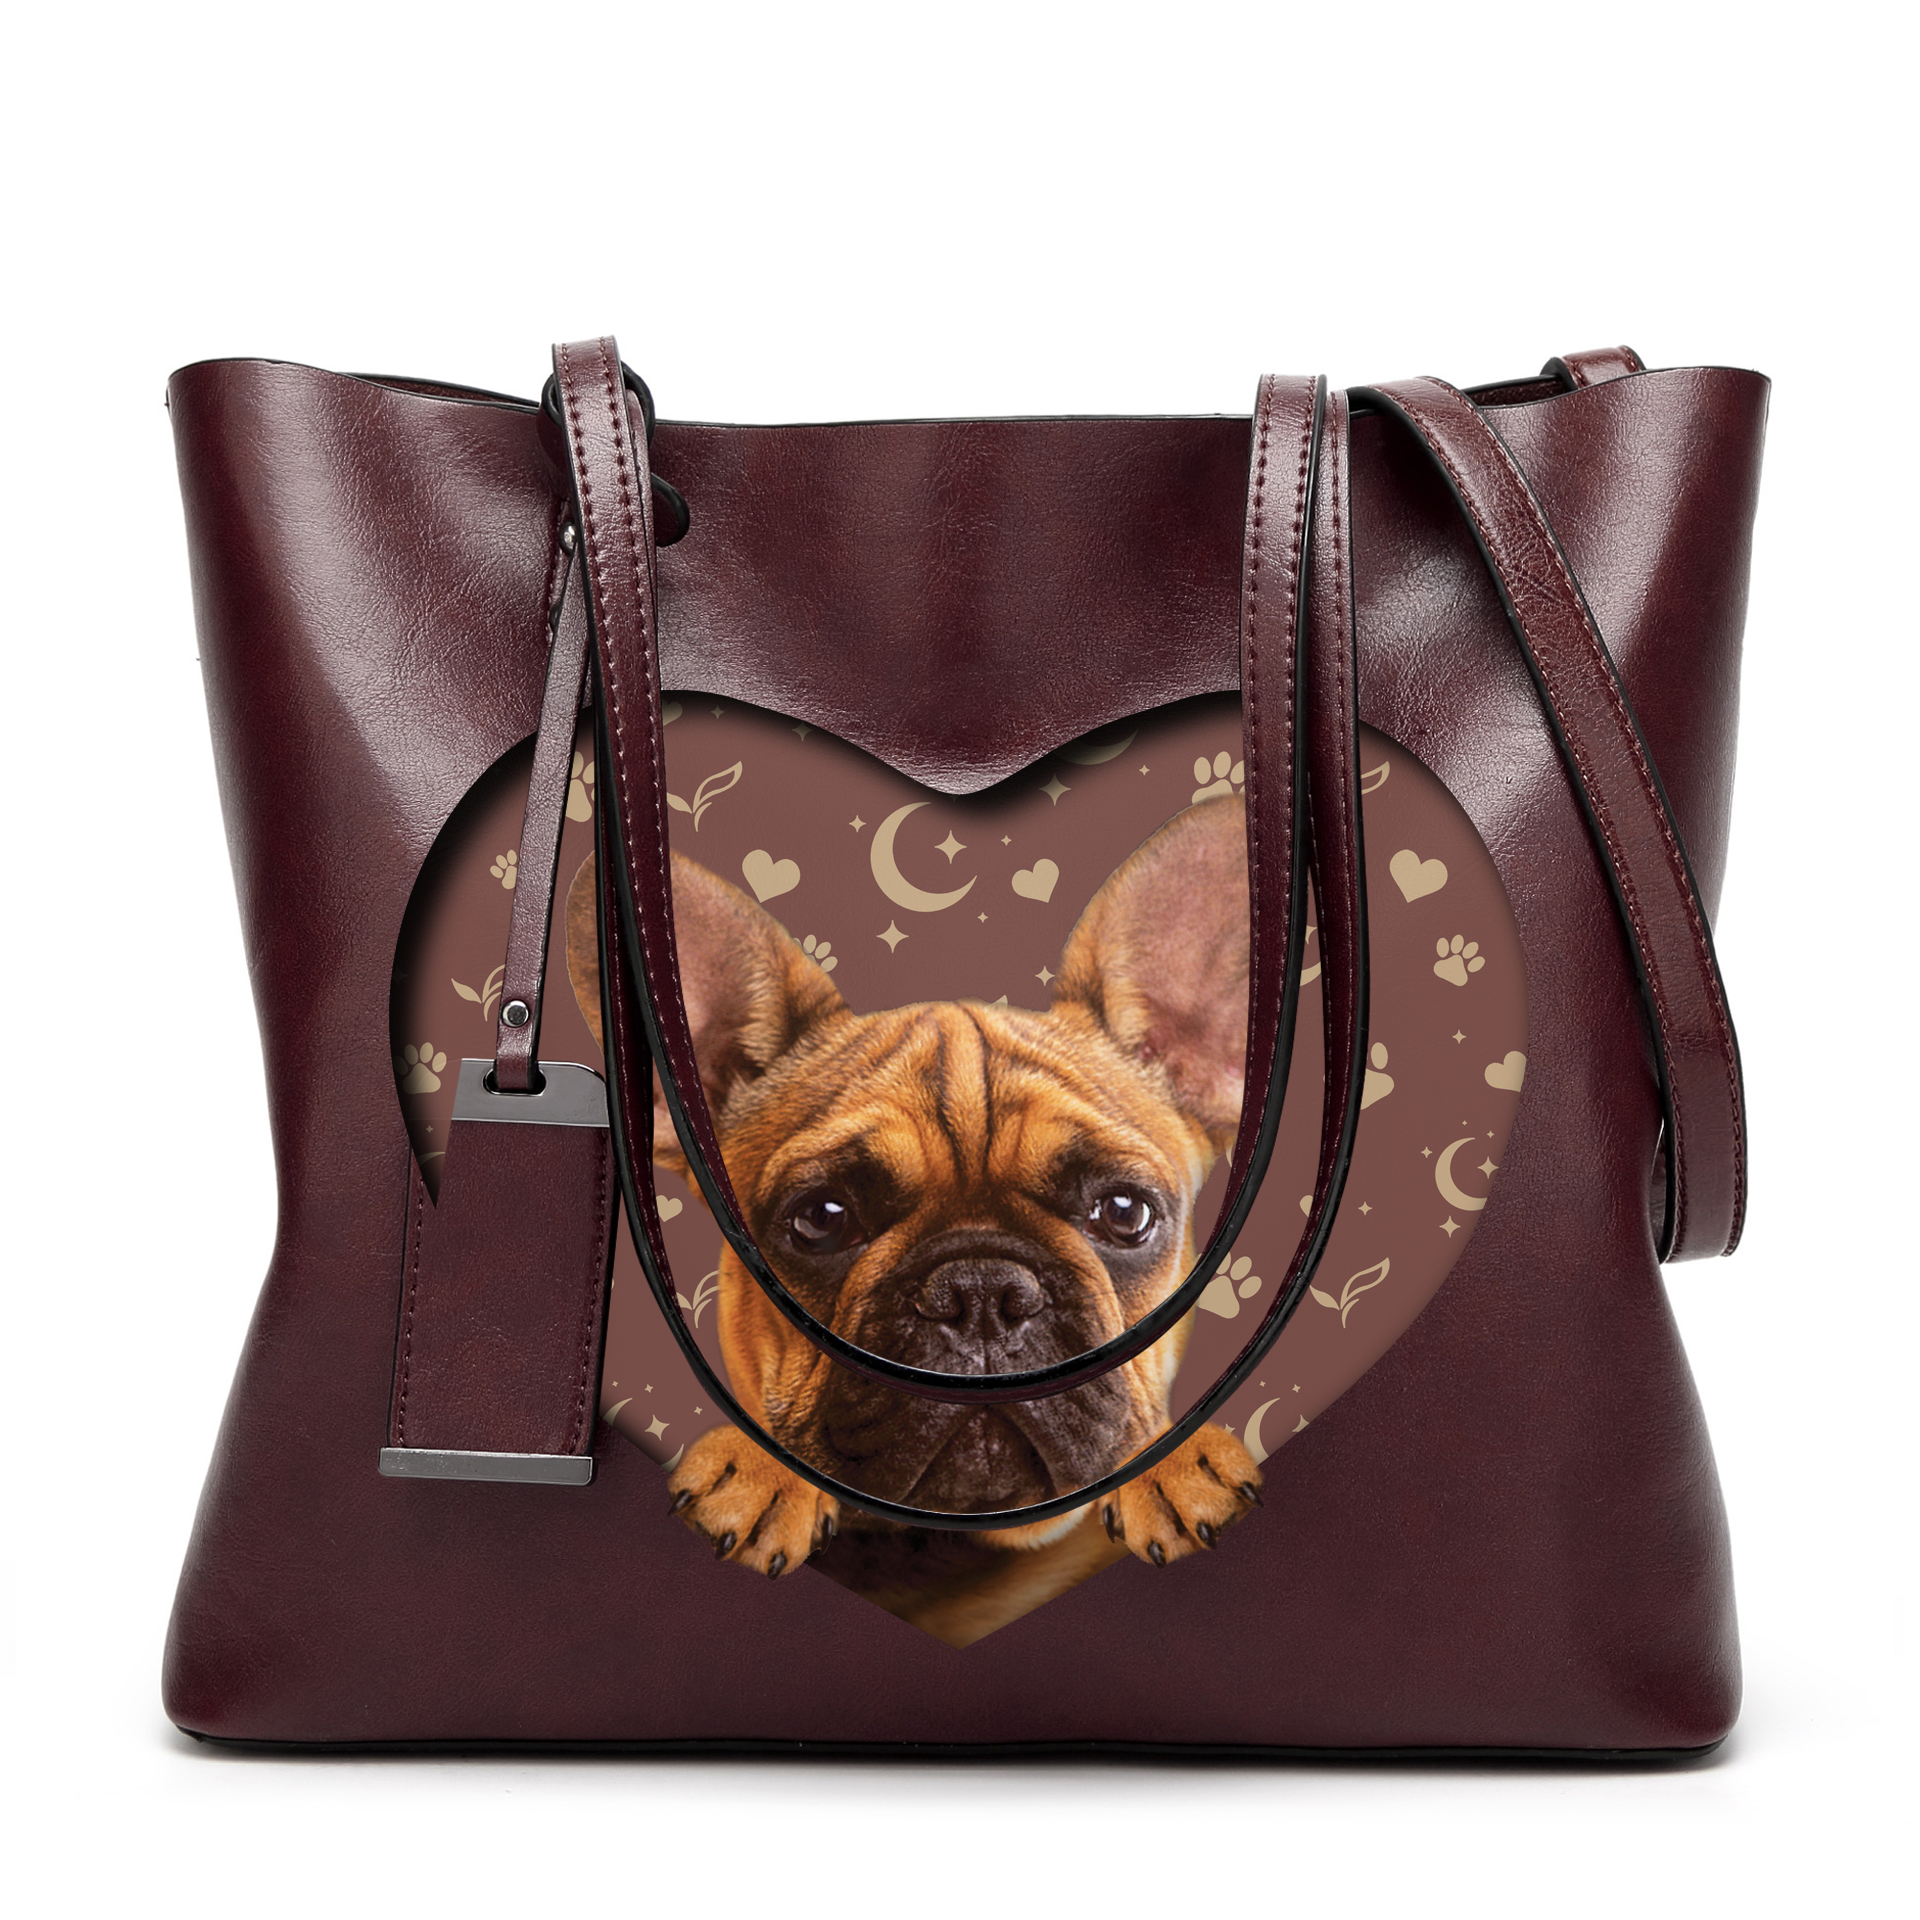 I Know I'm Cute - French Bulldog Glamour Handbag V1 - 5